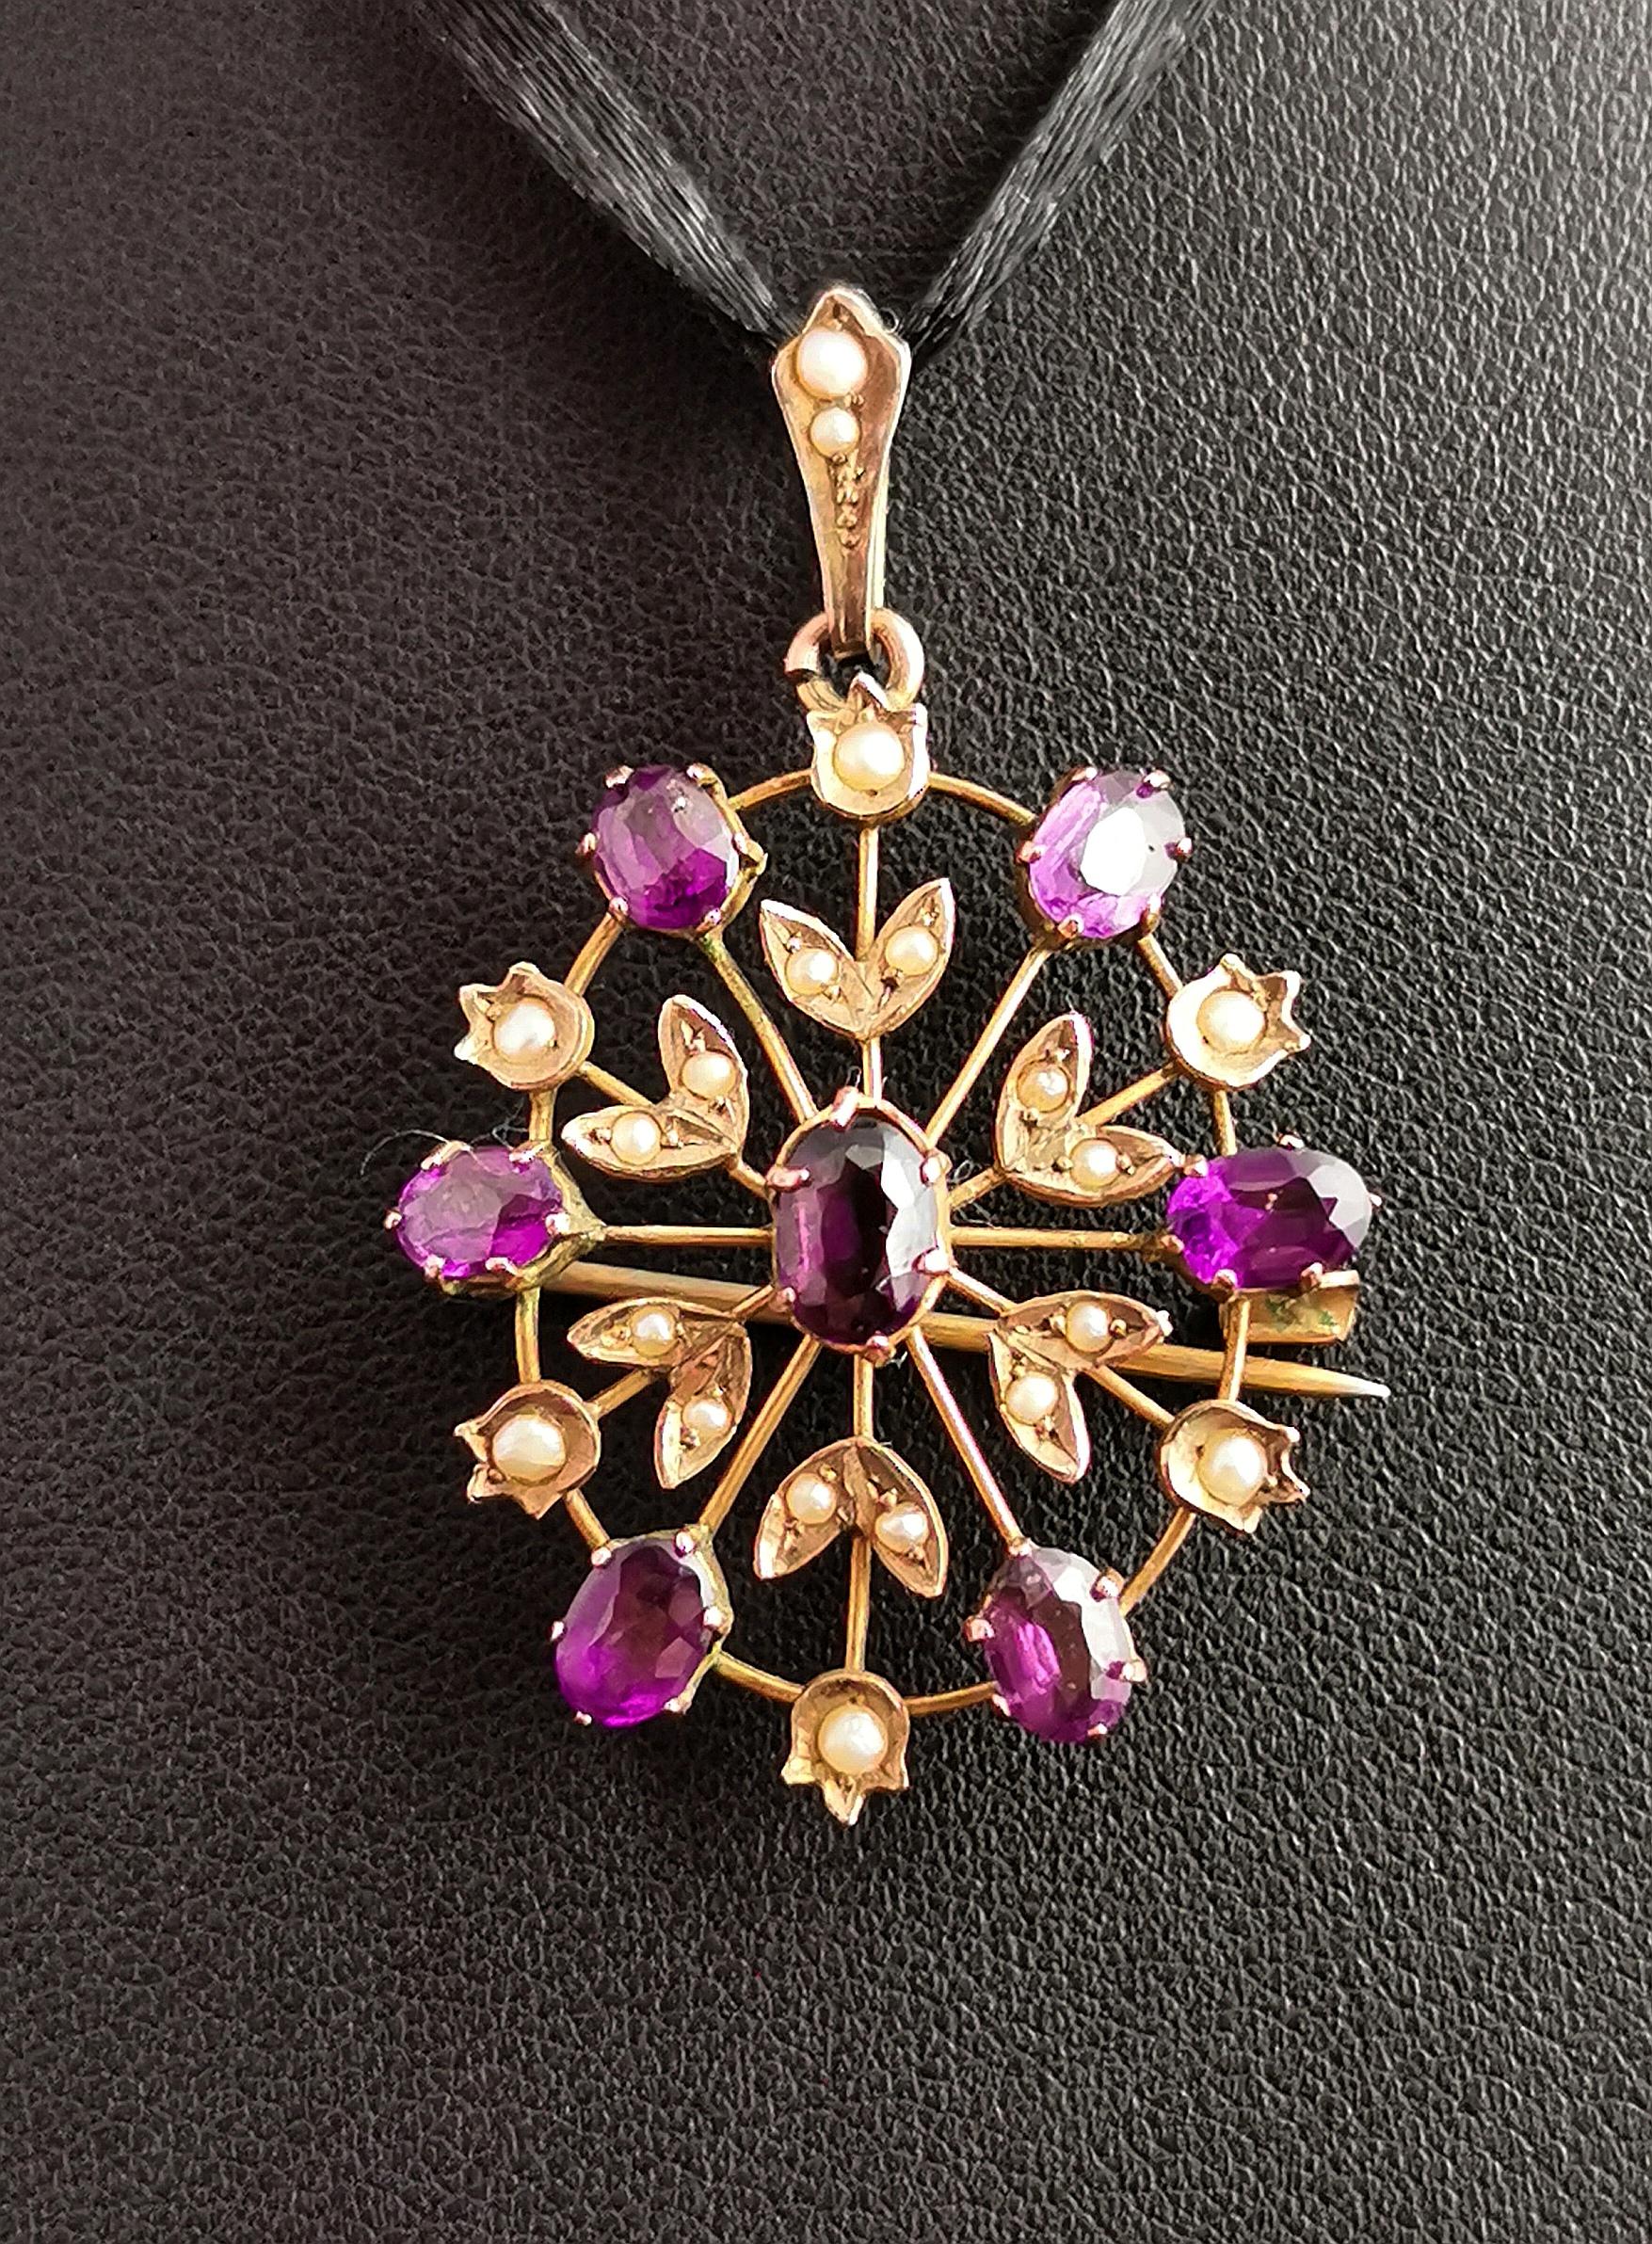 Antique Art Nouveau Amethyst and Pearl Pendant Brooch, Floral Starburst, 9k Gold 2